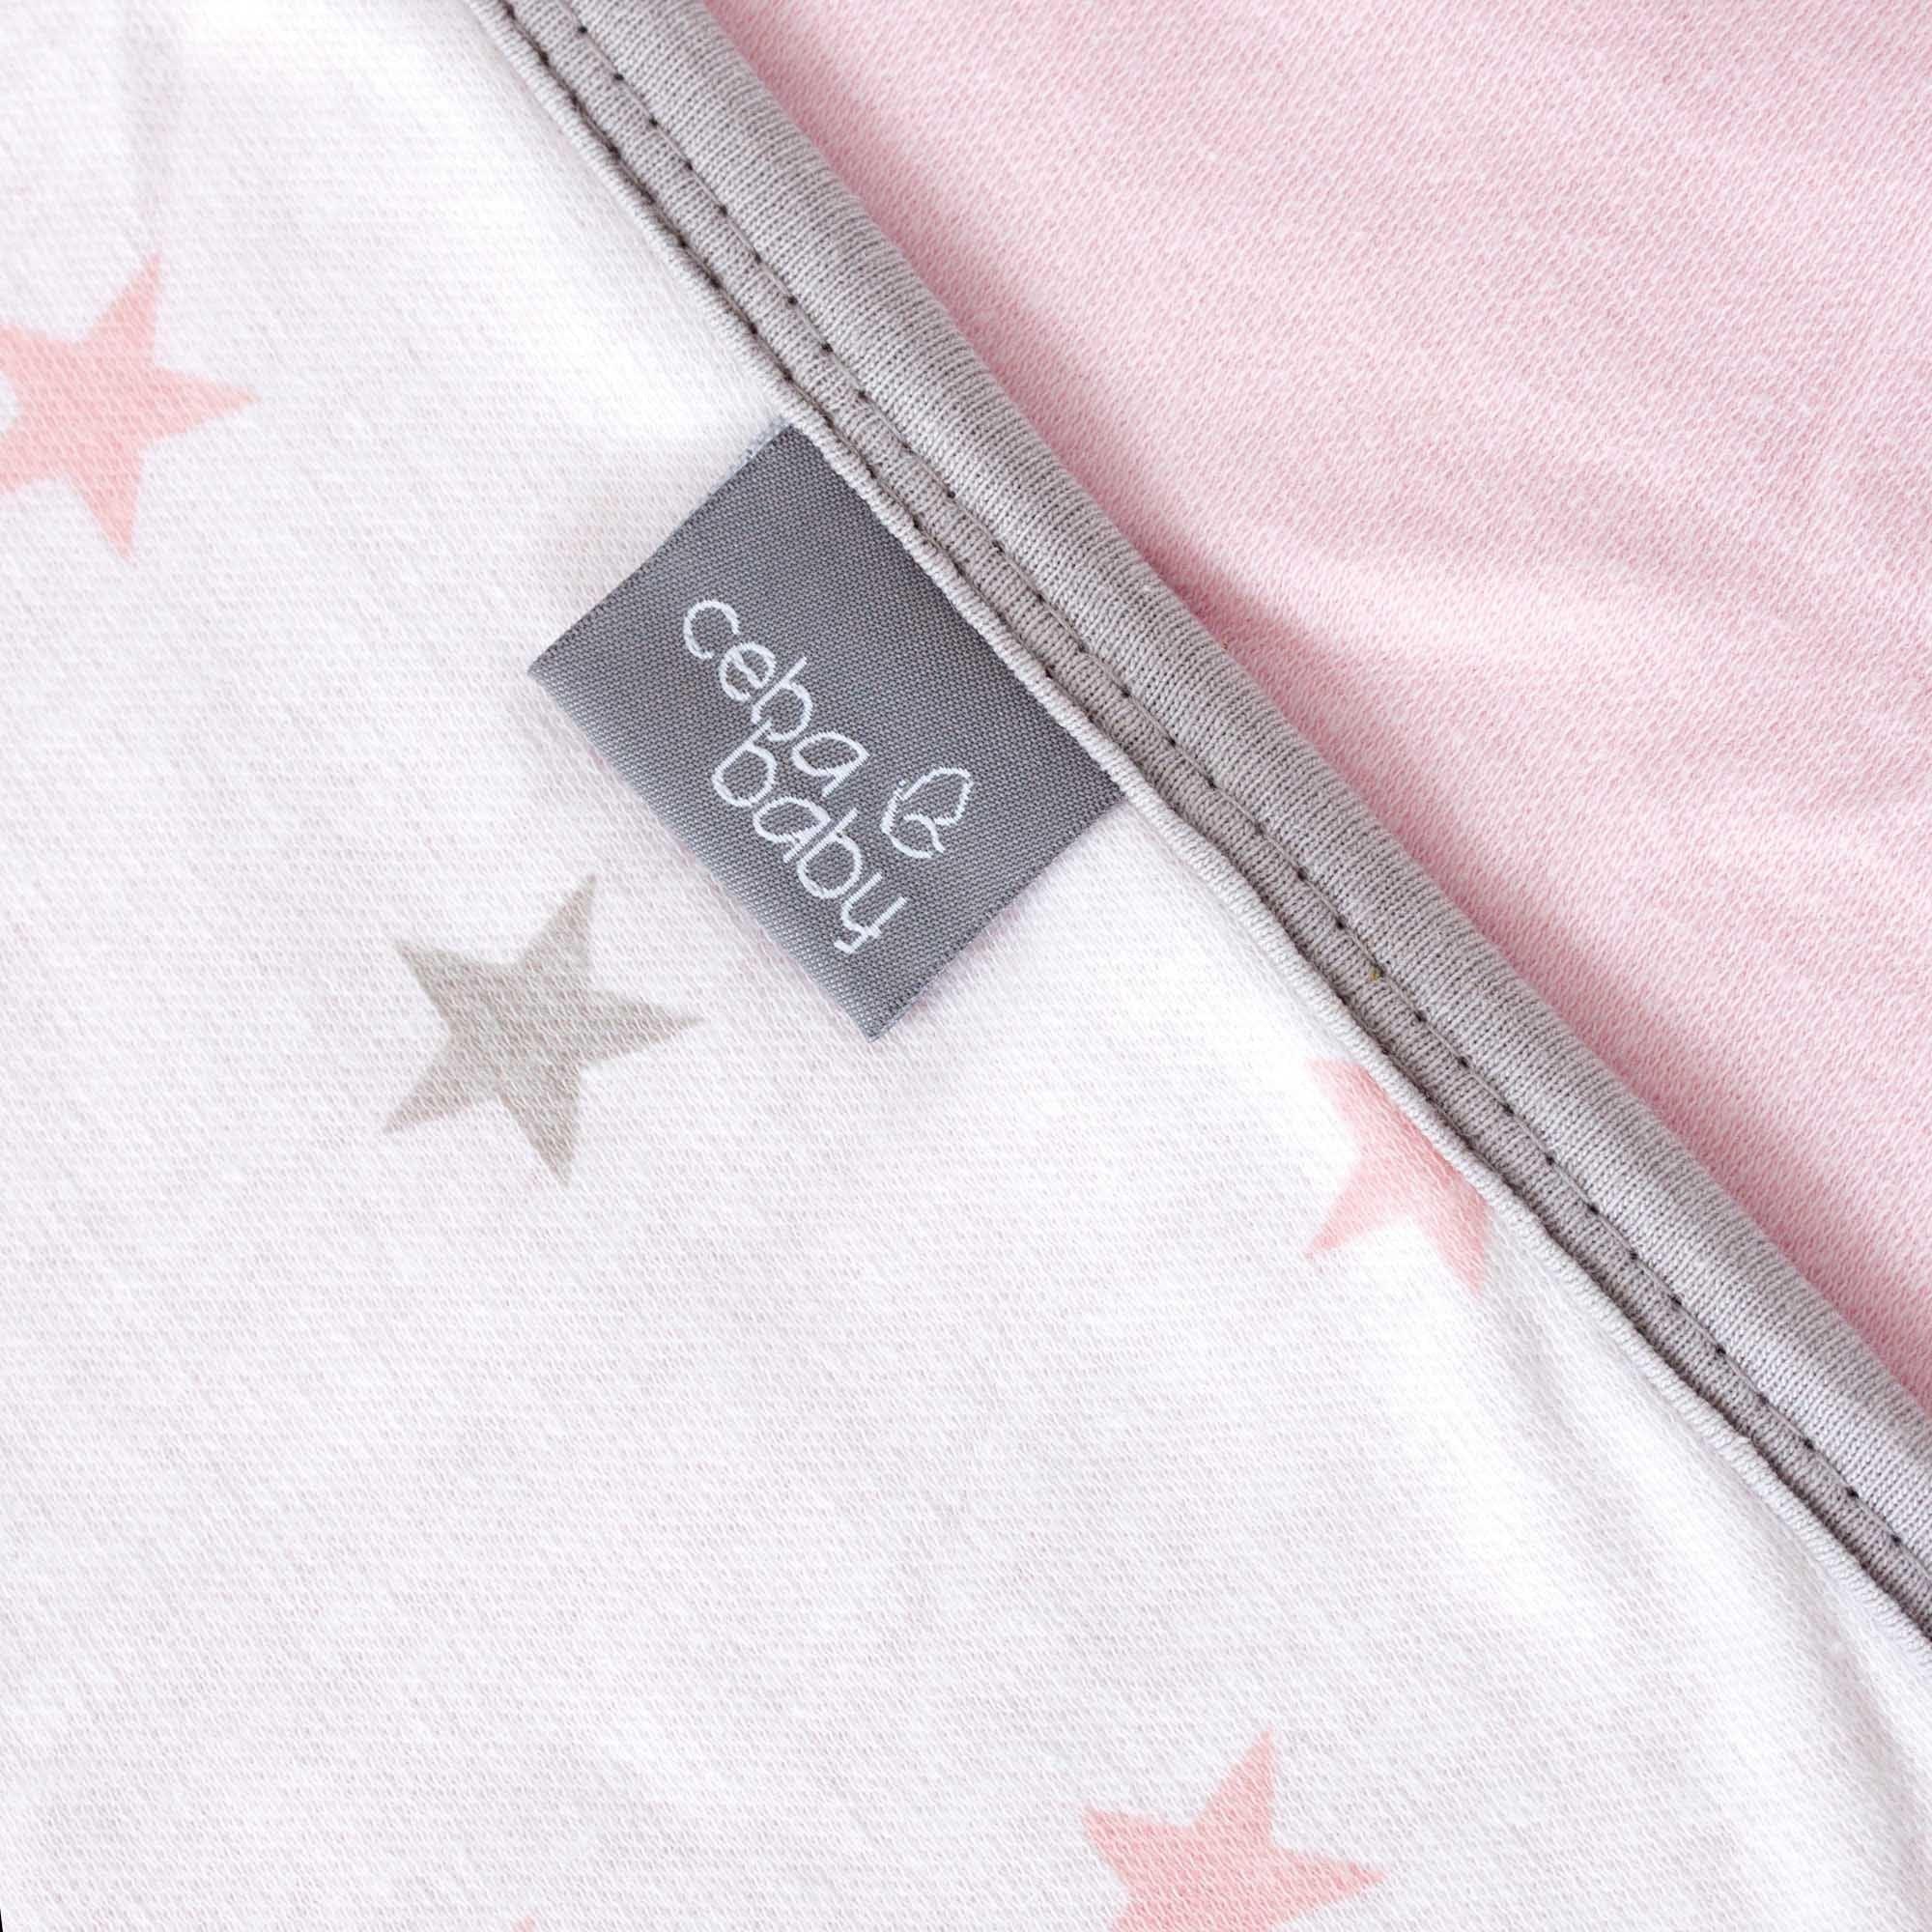 Ceba Baby - Ceba Baby Cotton Baby Blanket (90x100) Medium Stars & Pink - Mari Kali Stores Cyprus